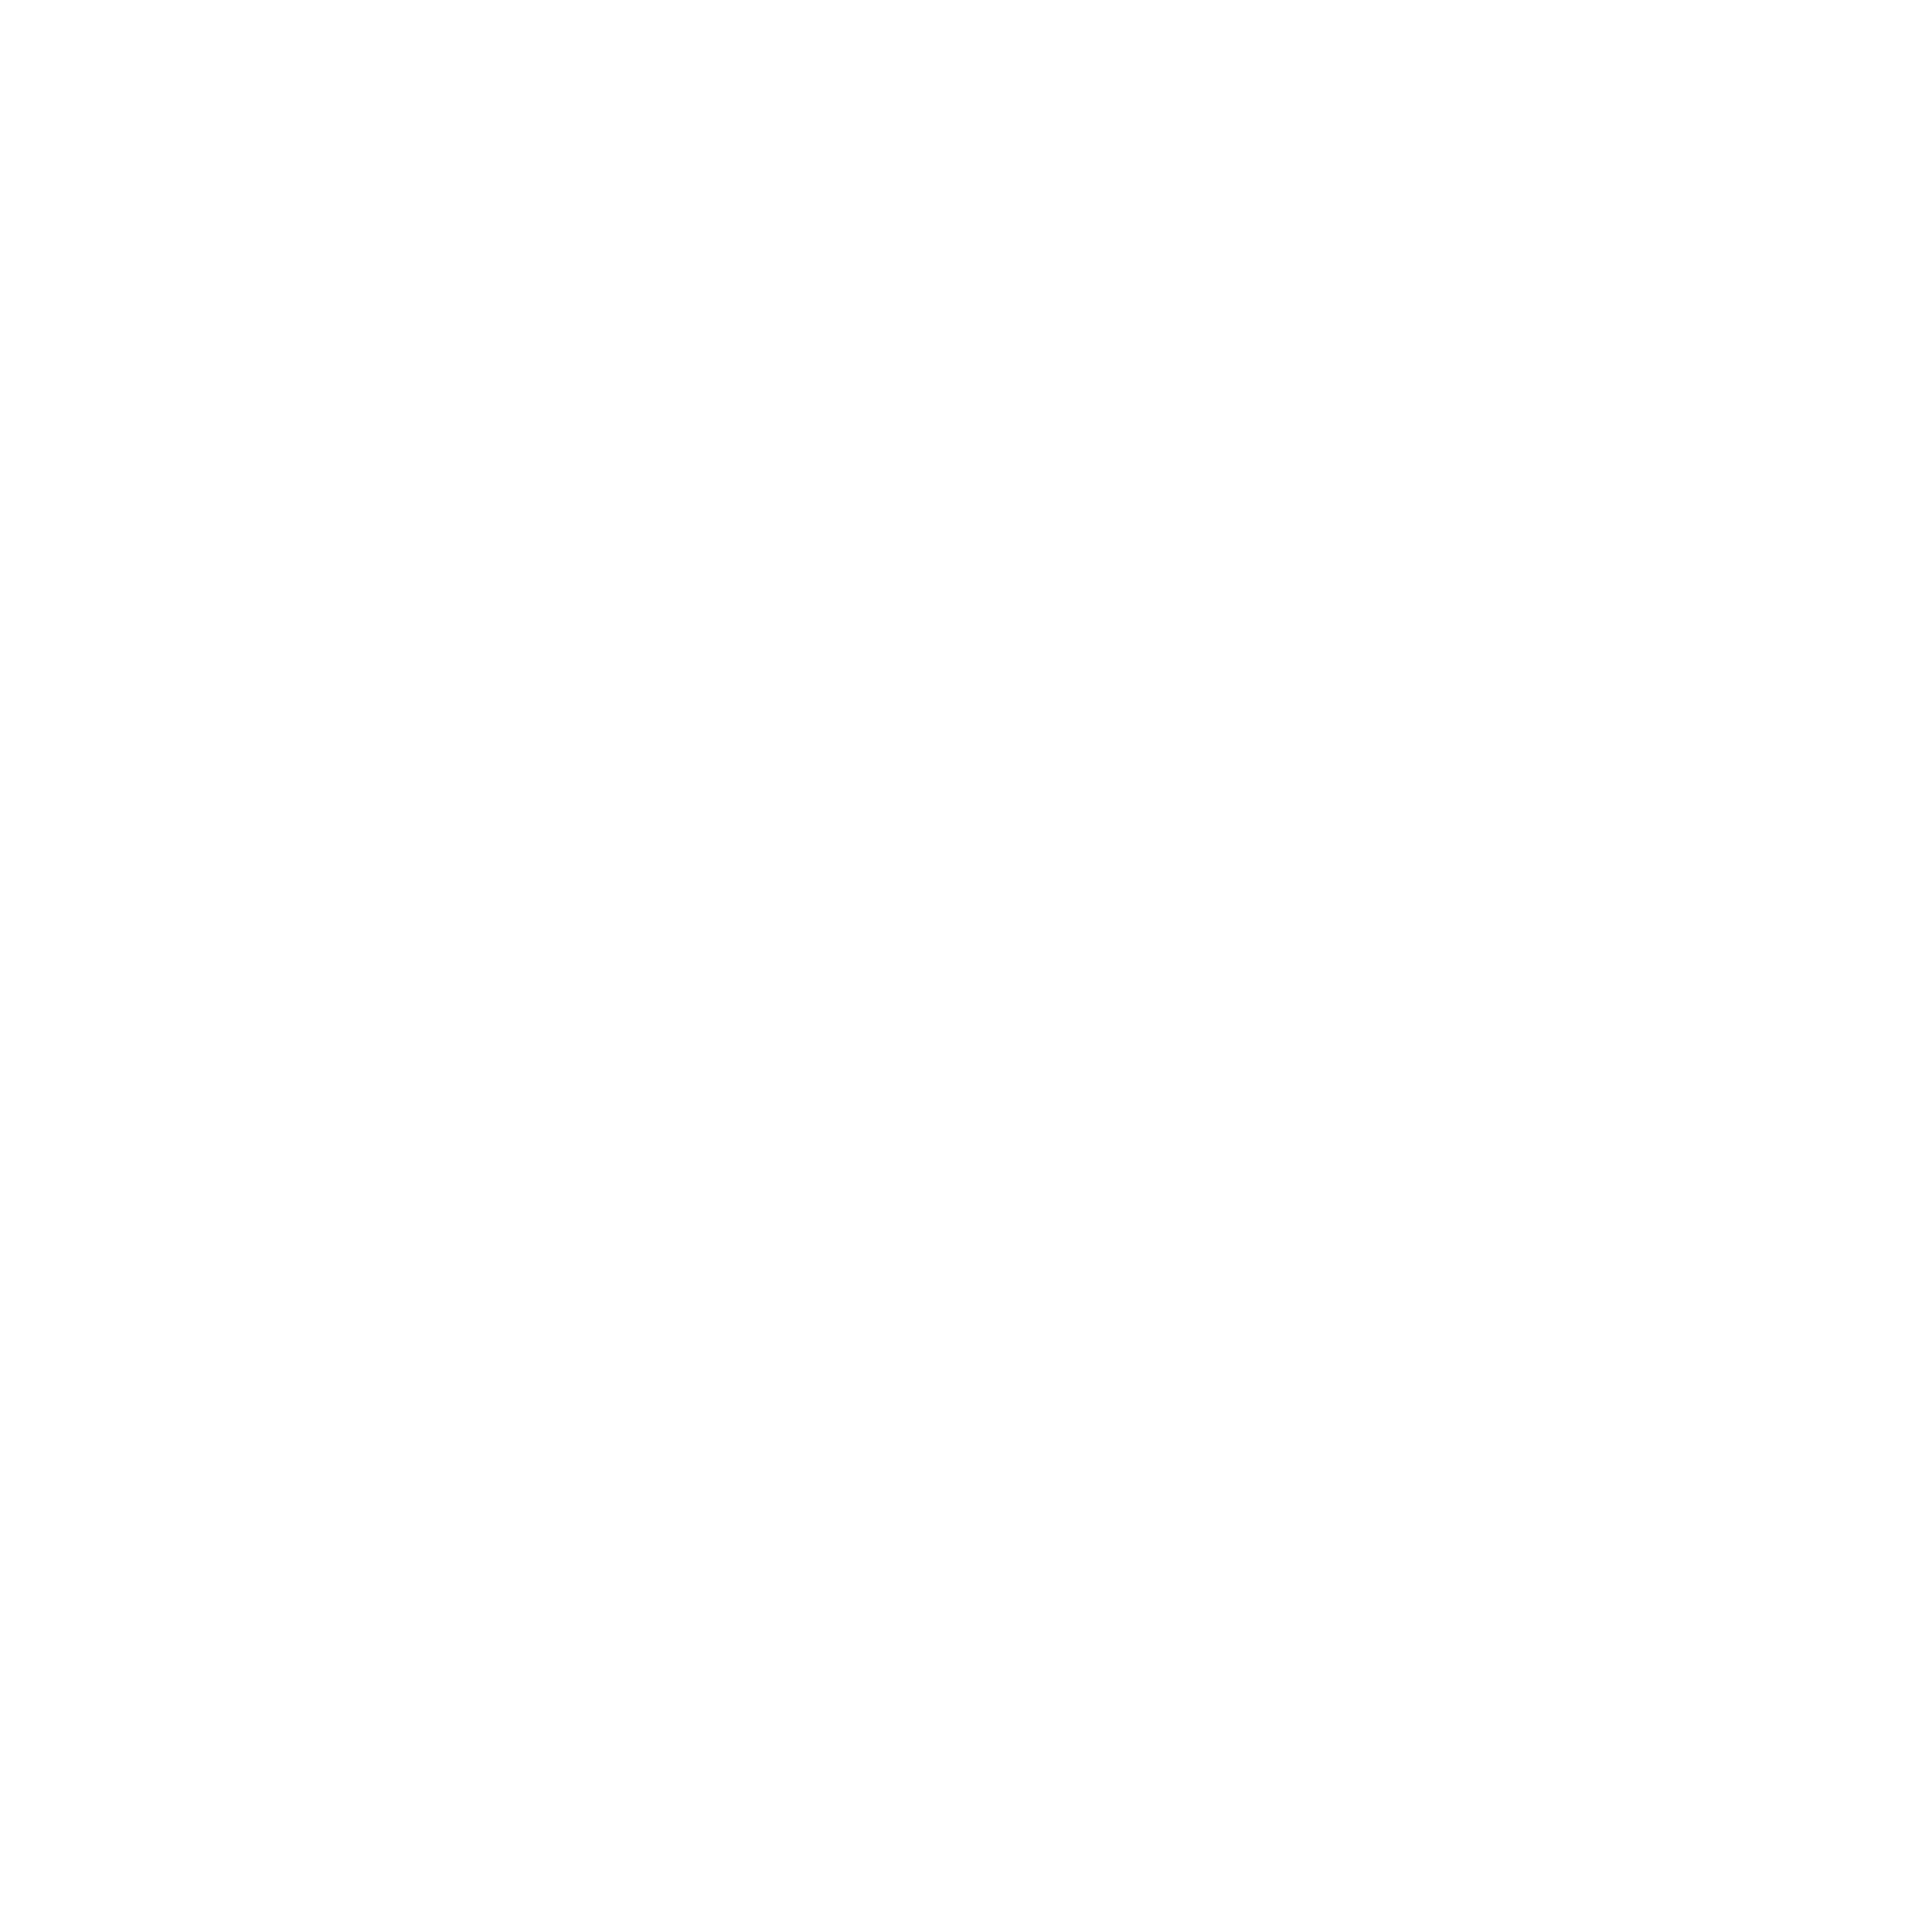 ITOCHU Logo - Itochu Logo PNG Transparent & SVG Vector - Freebie Supply